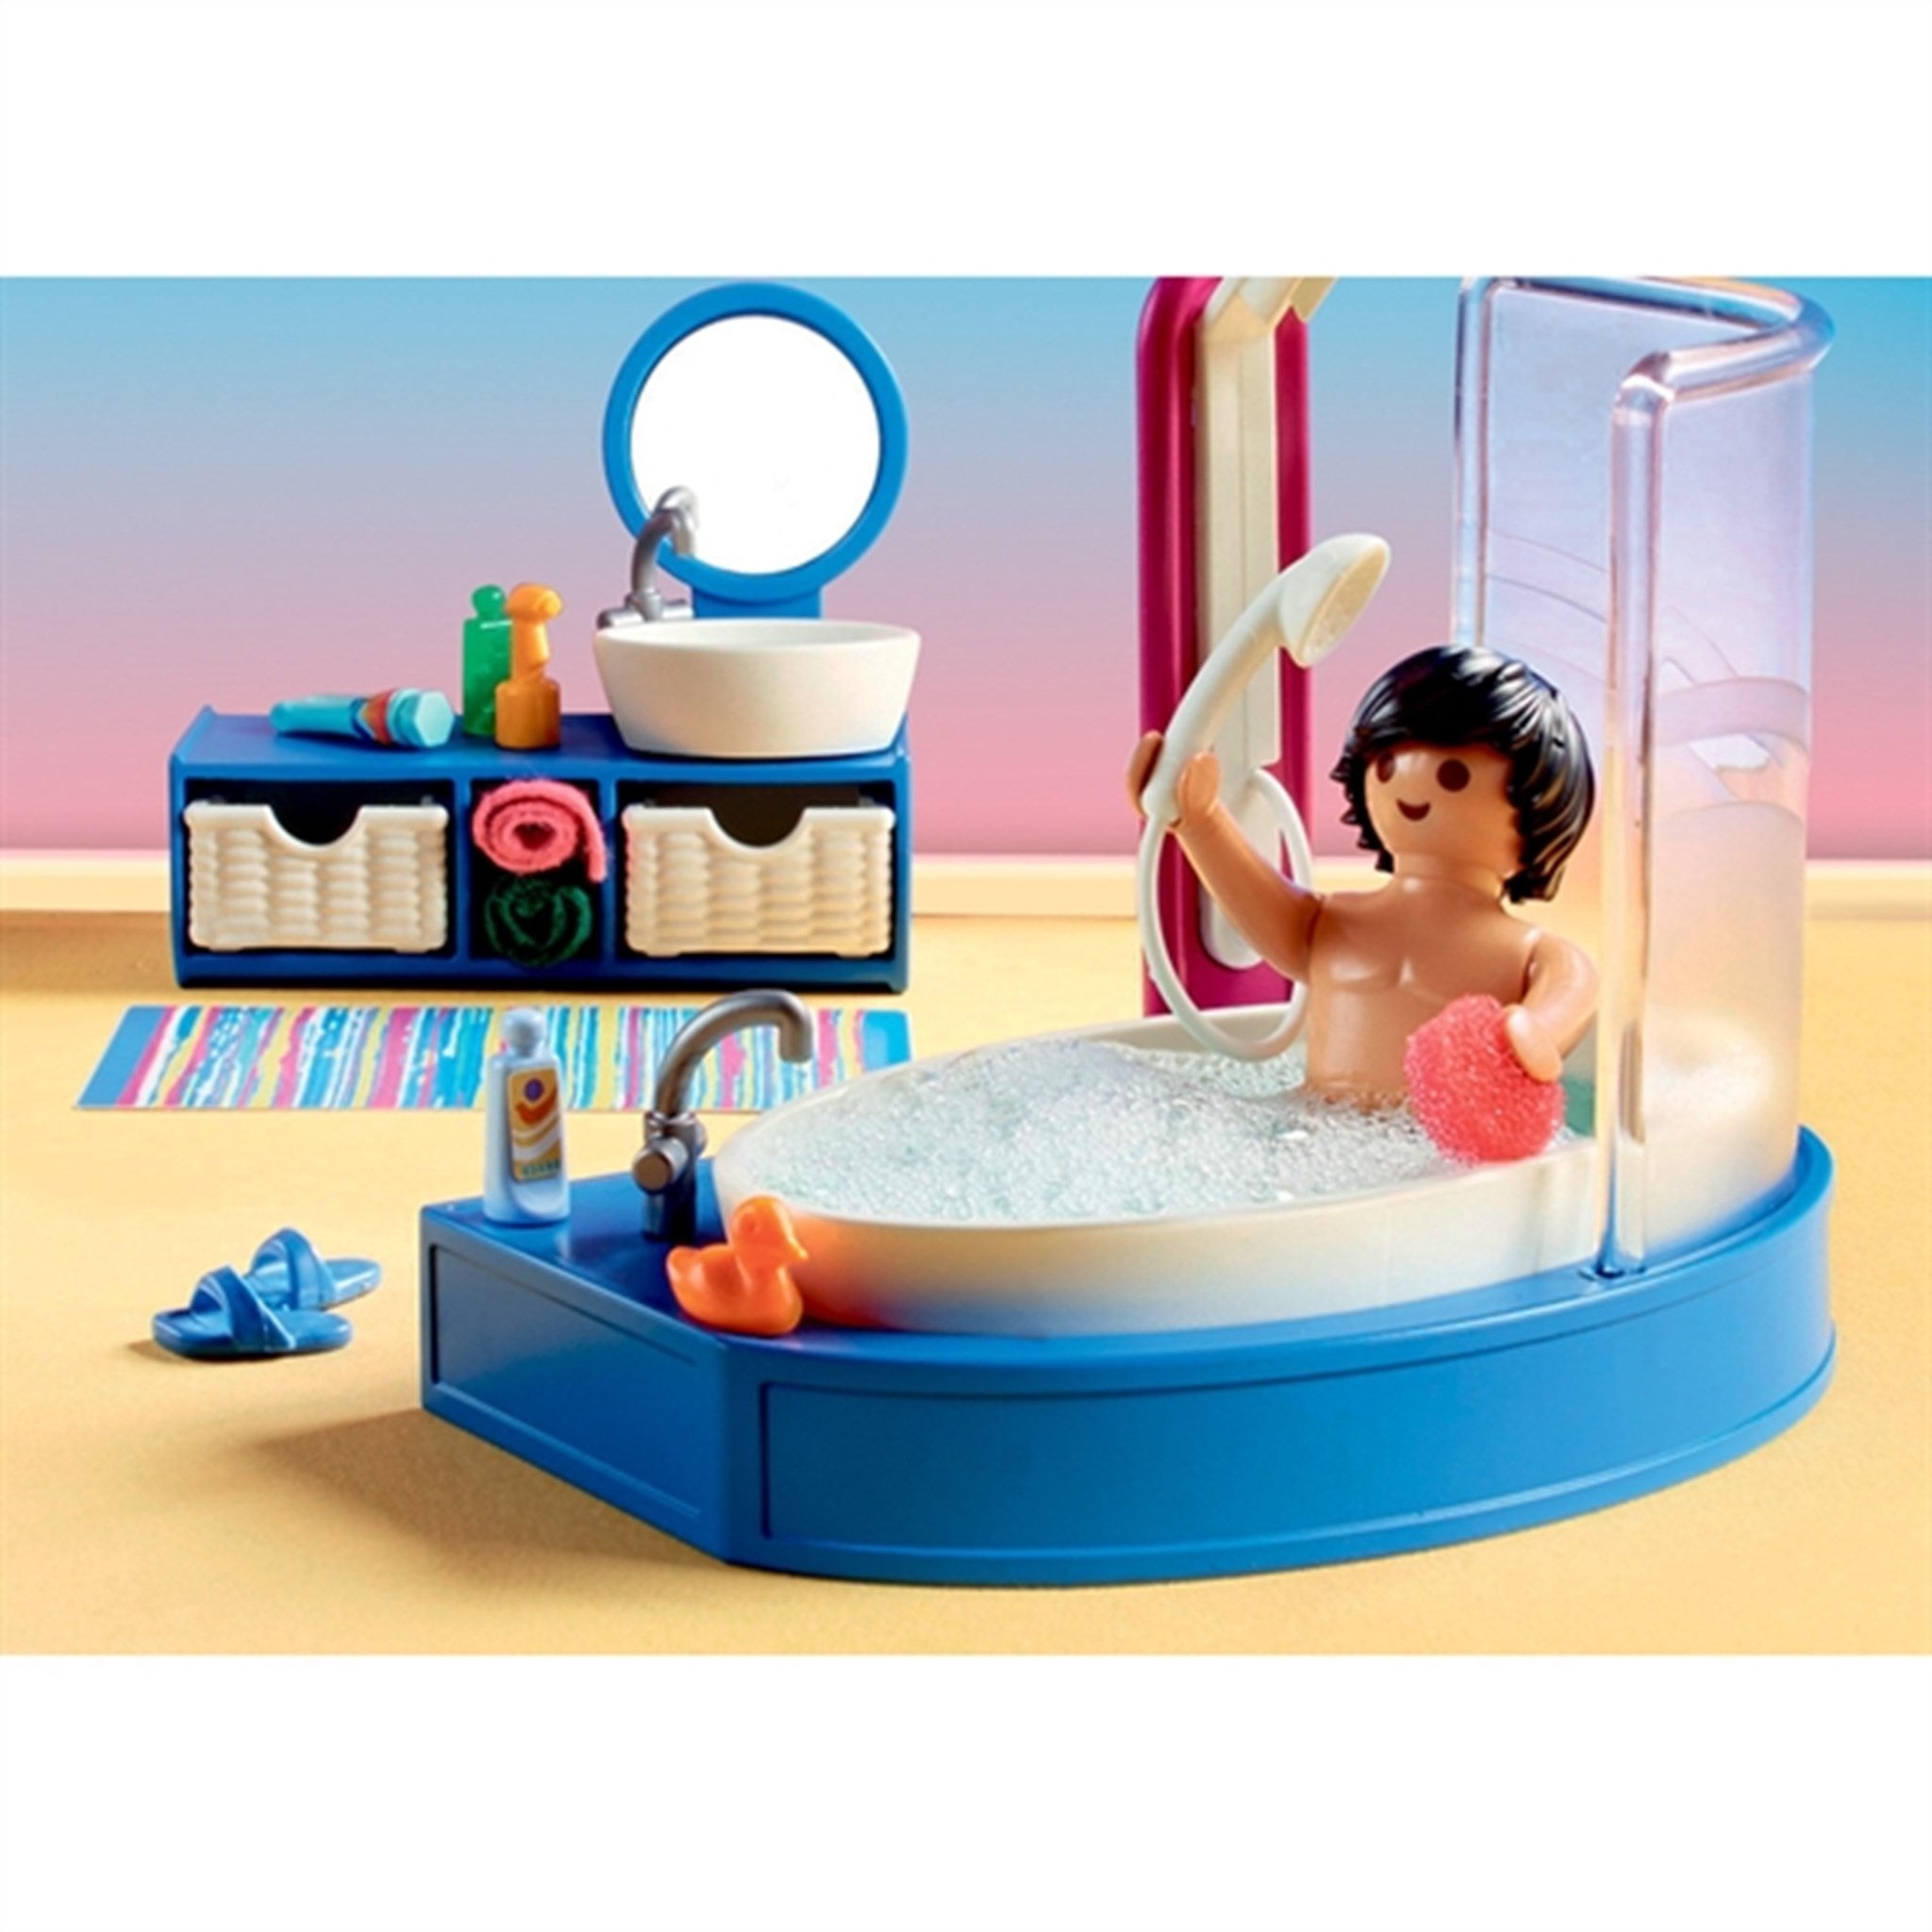 Playmobil® Dollhouse - Bathroom with Tub 2